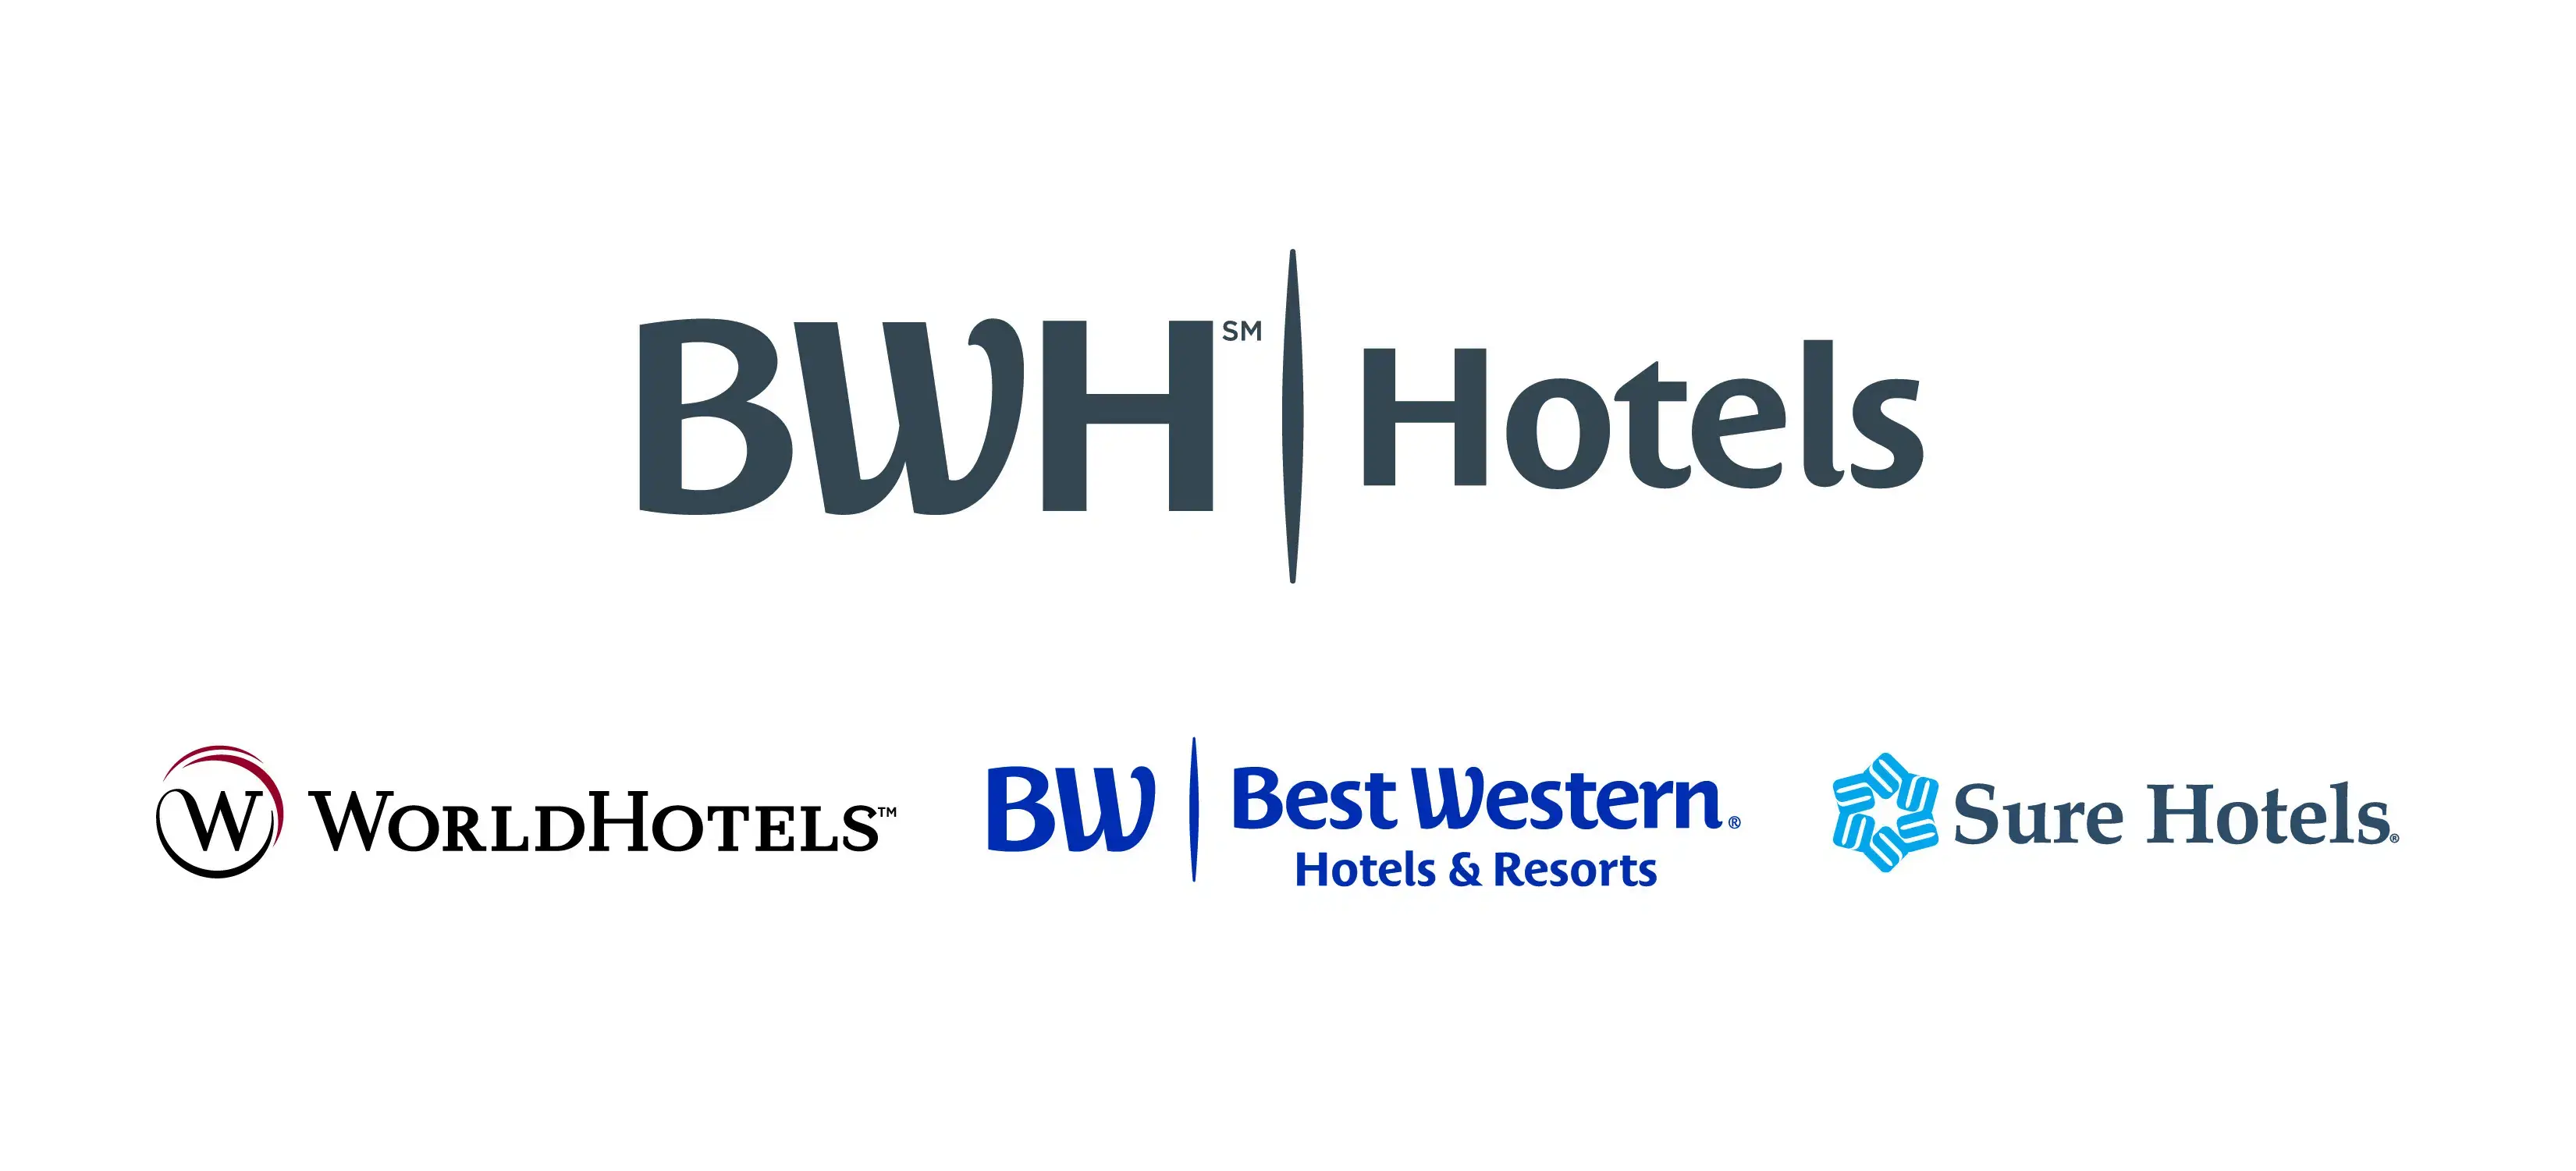 BWH Hotels logo - WorldHotels, Best Western, Sure Hotels